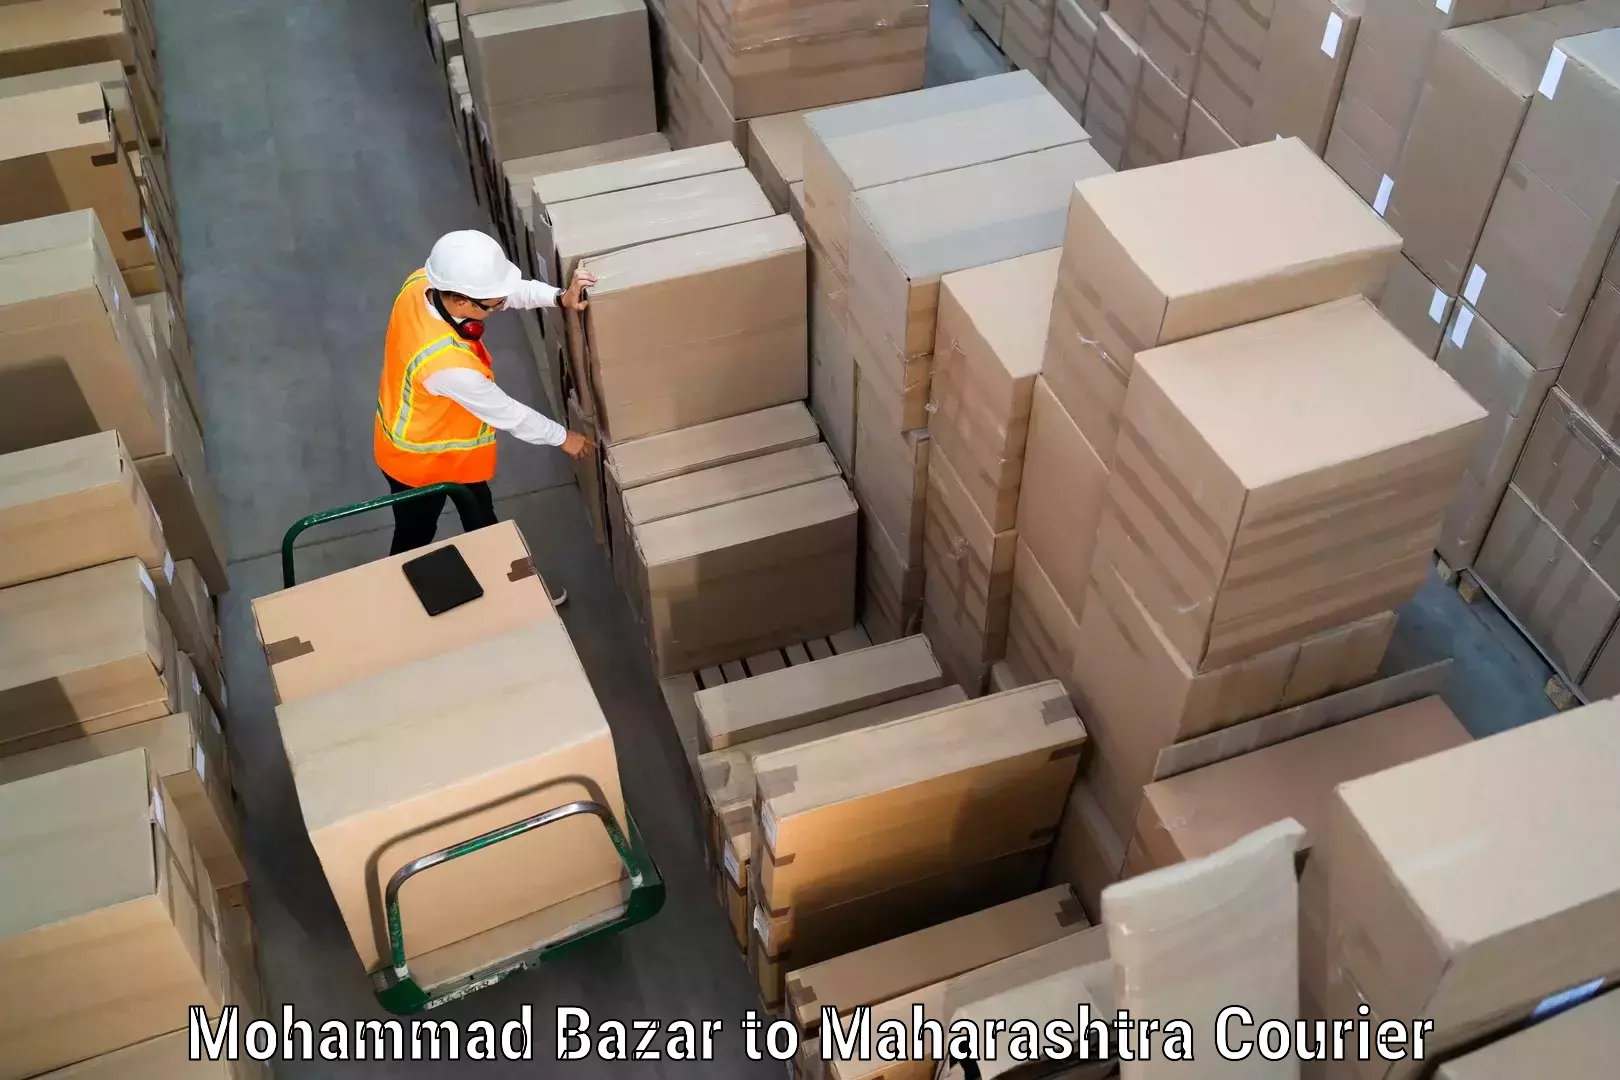 Streamlined delivery processes Mohammad Bazar to Maharashtra